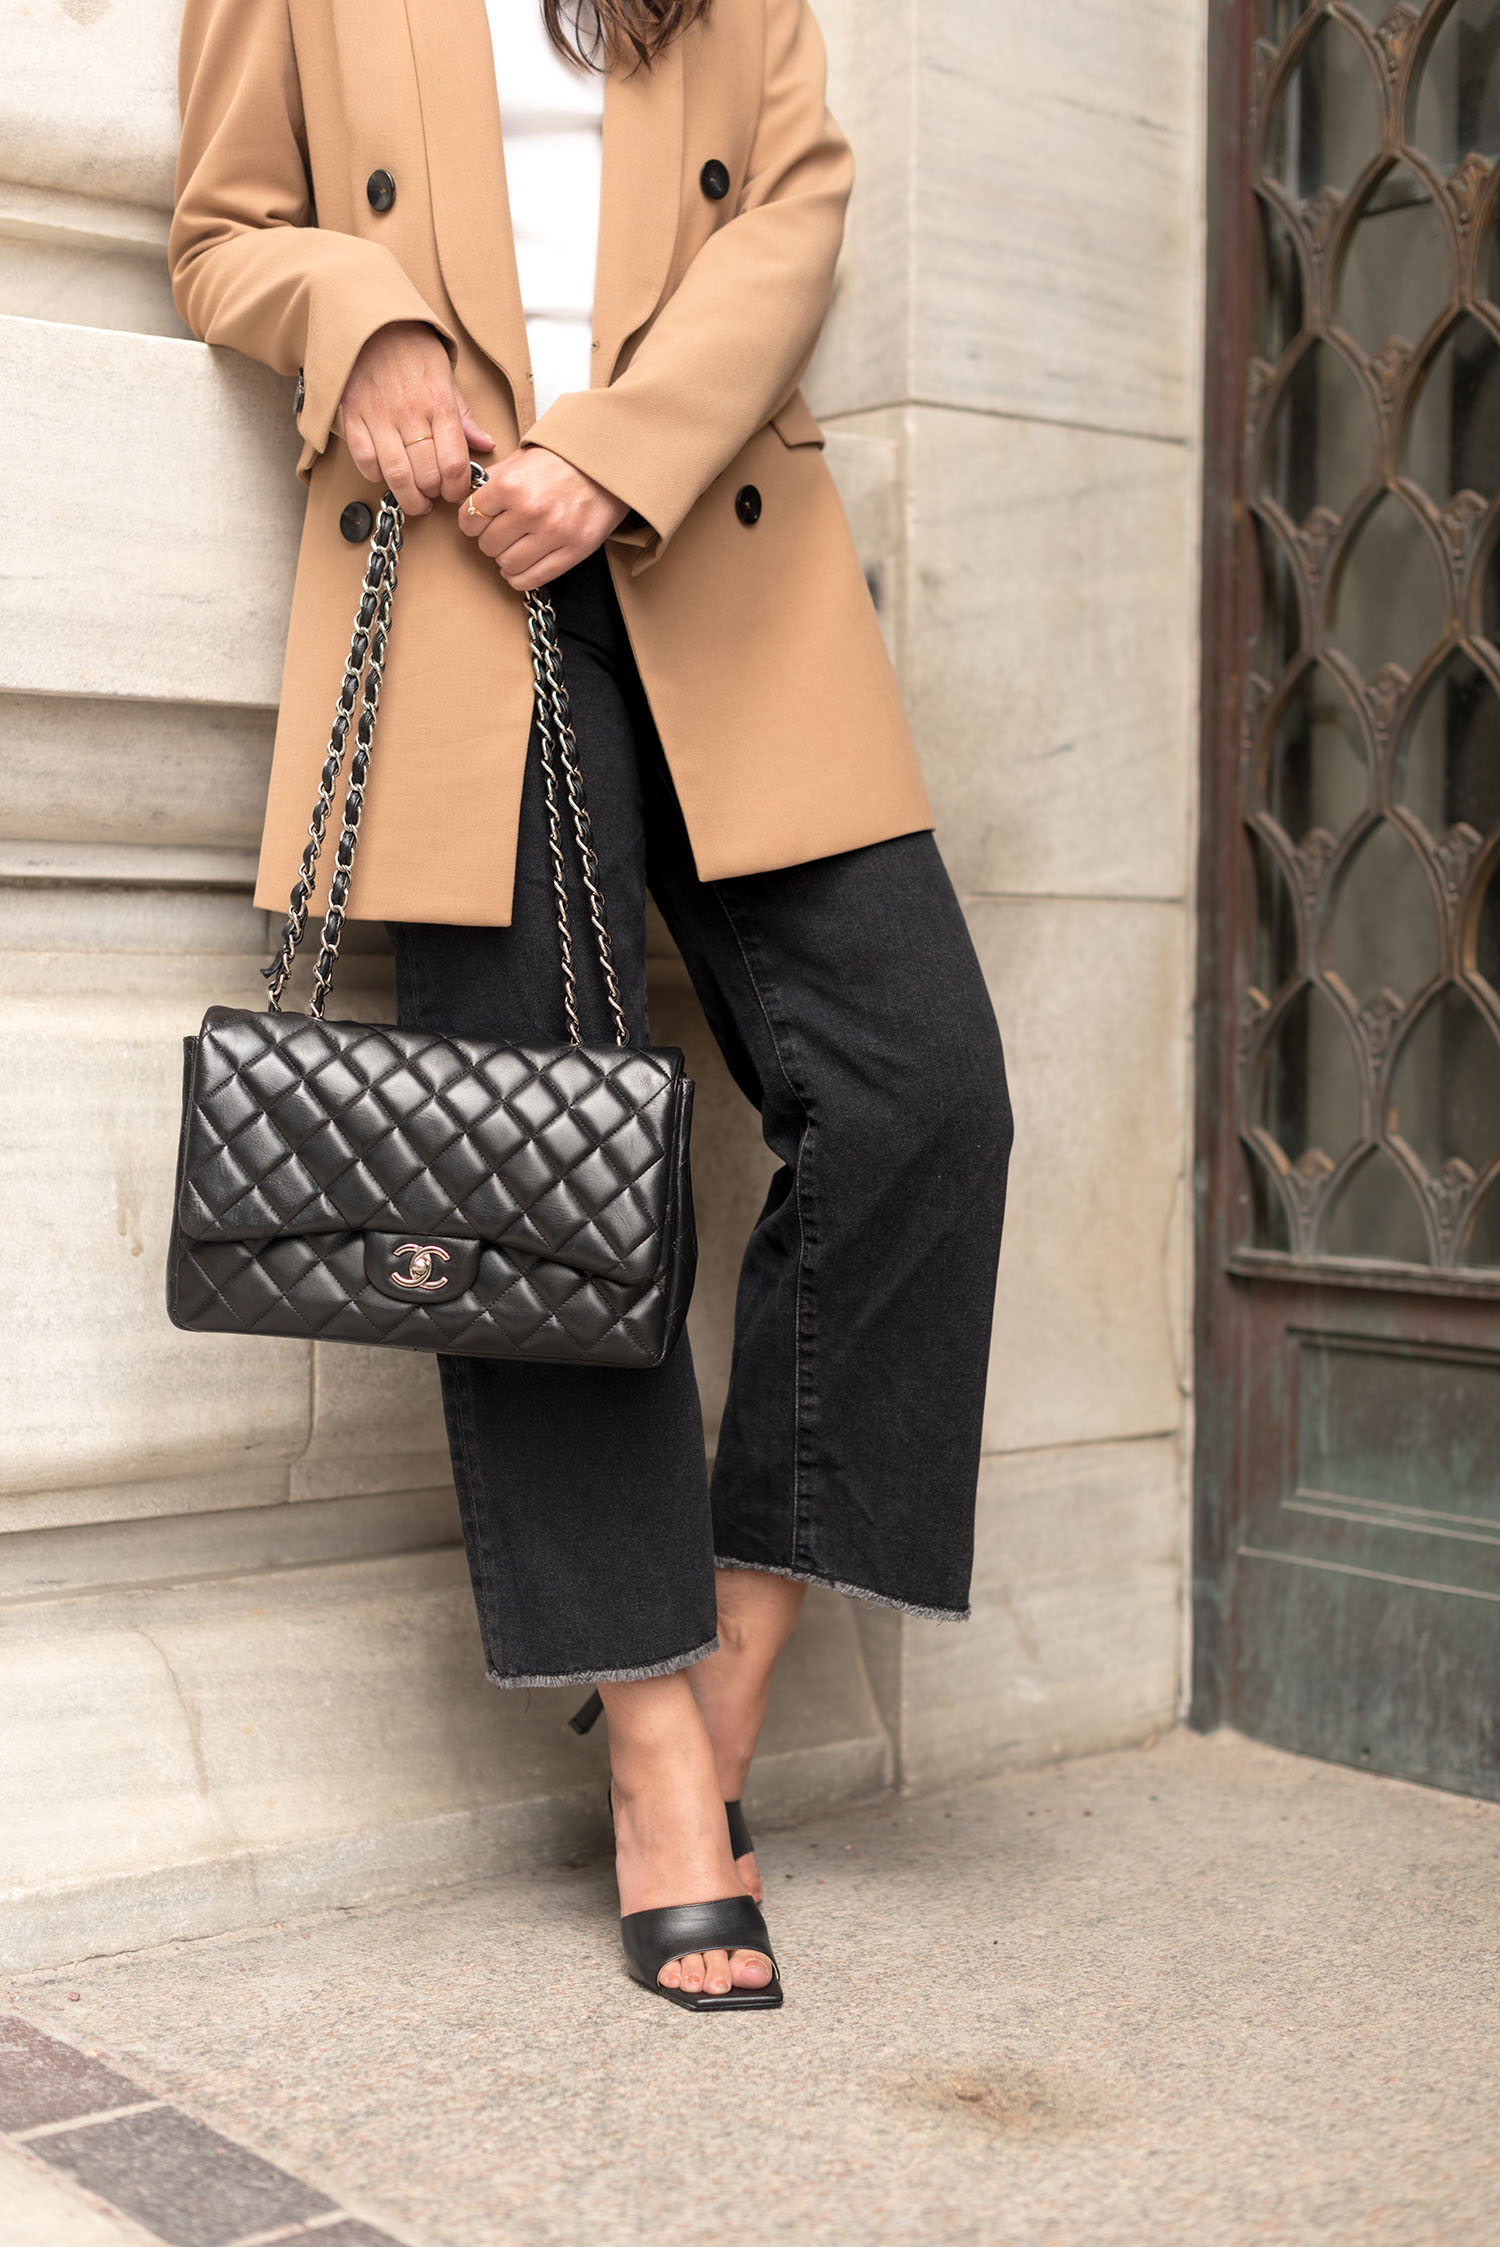 Coco & Vera - Chanel handbag, Mavi jeans, Dune London mules